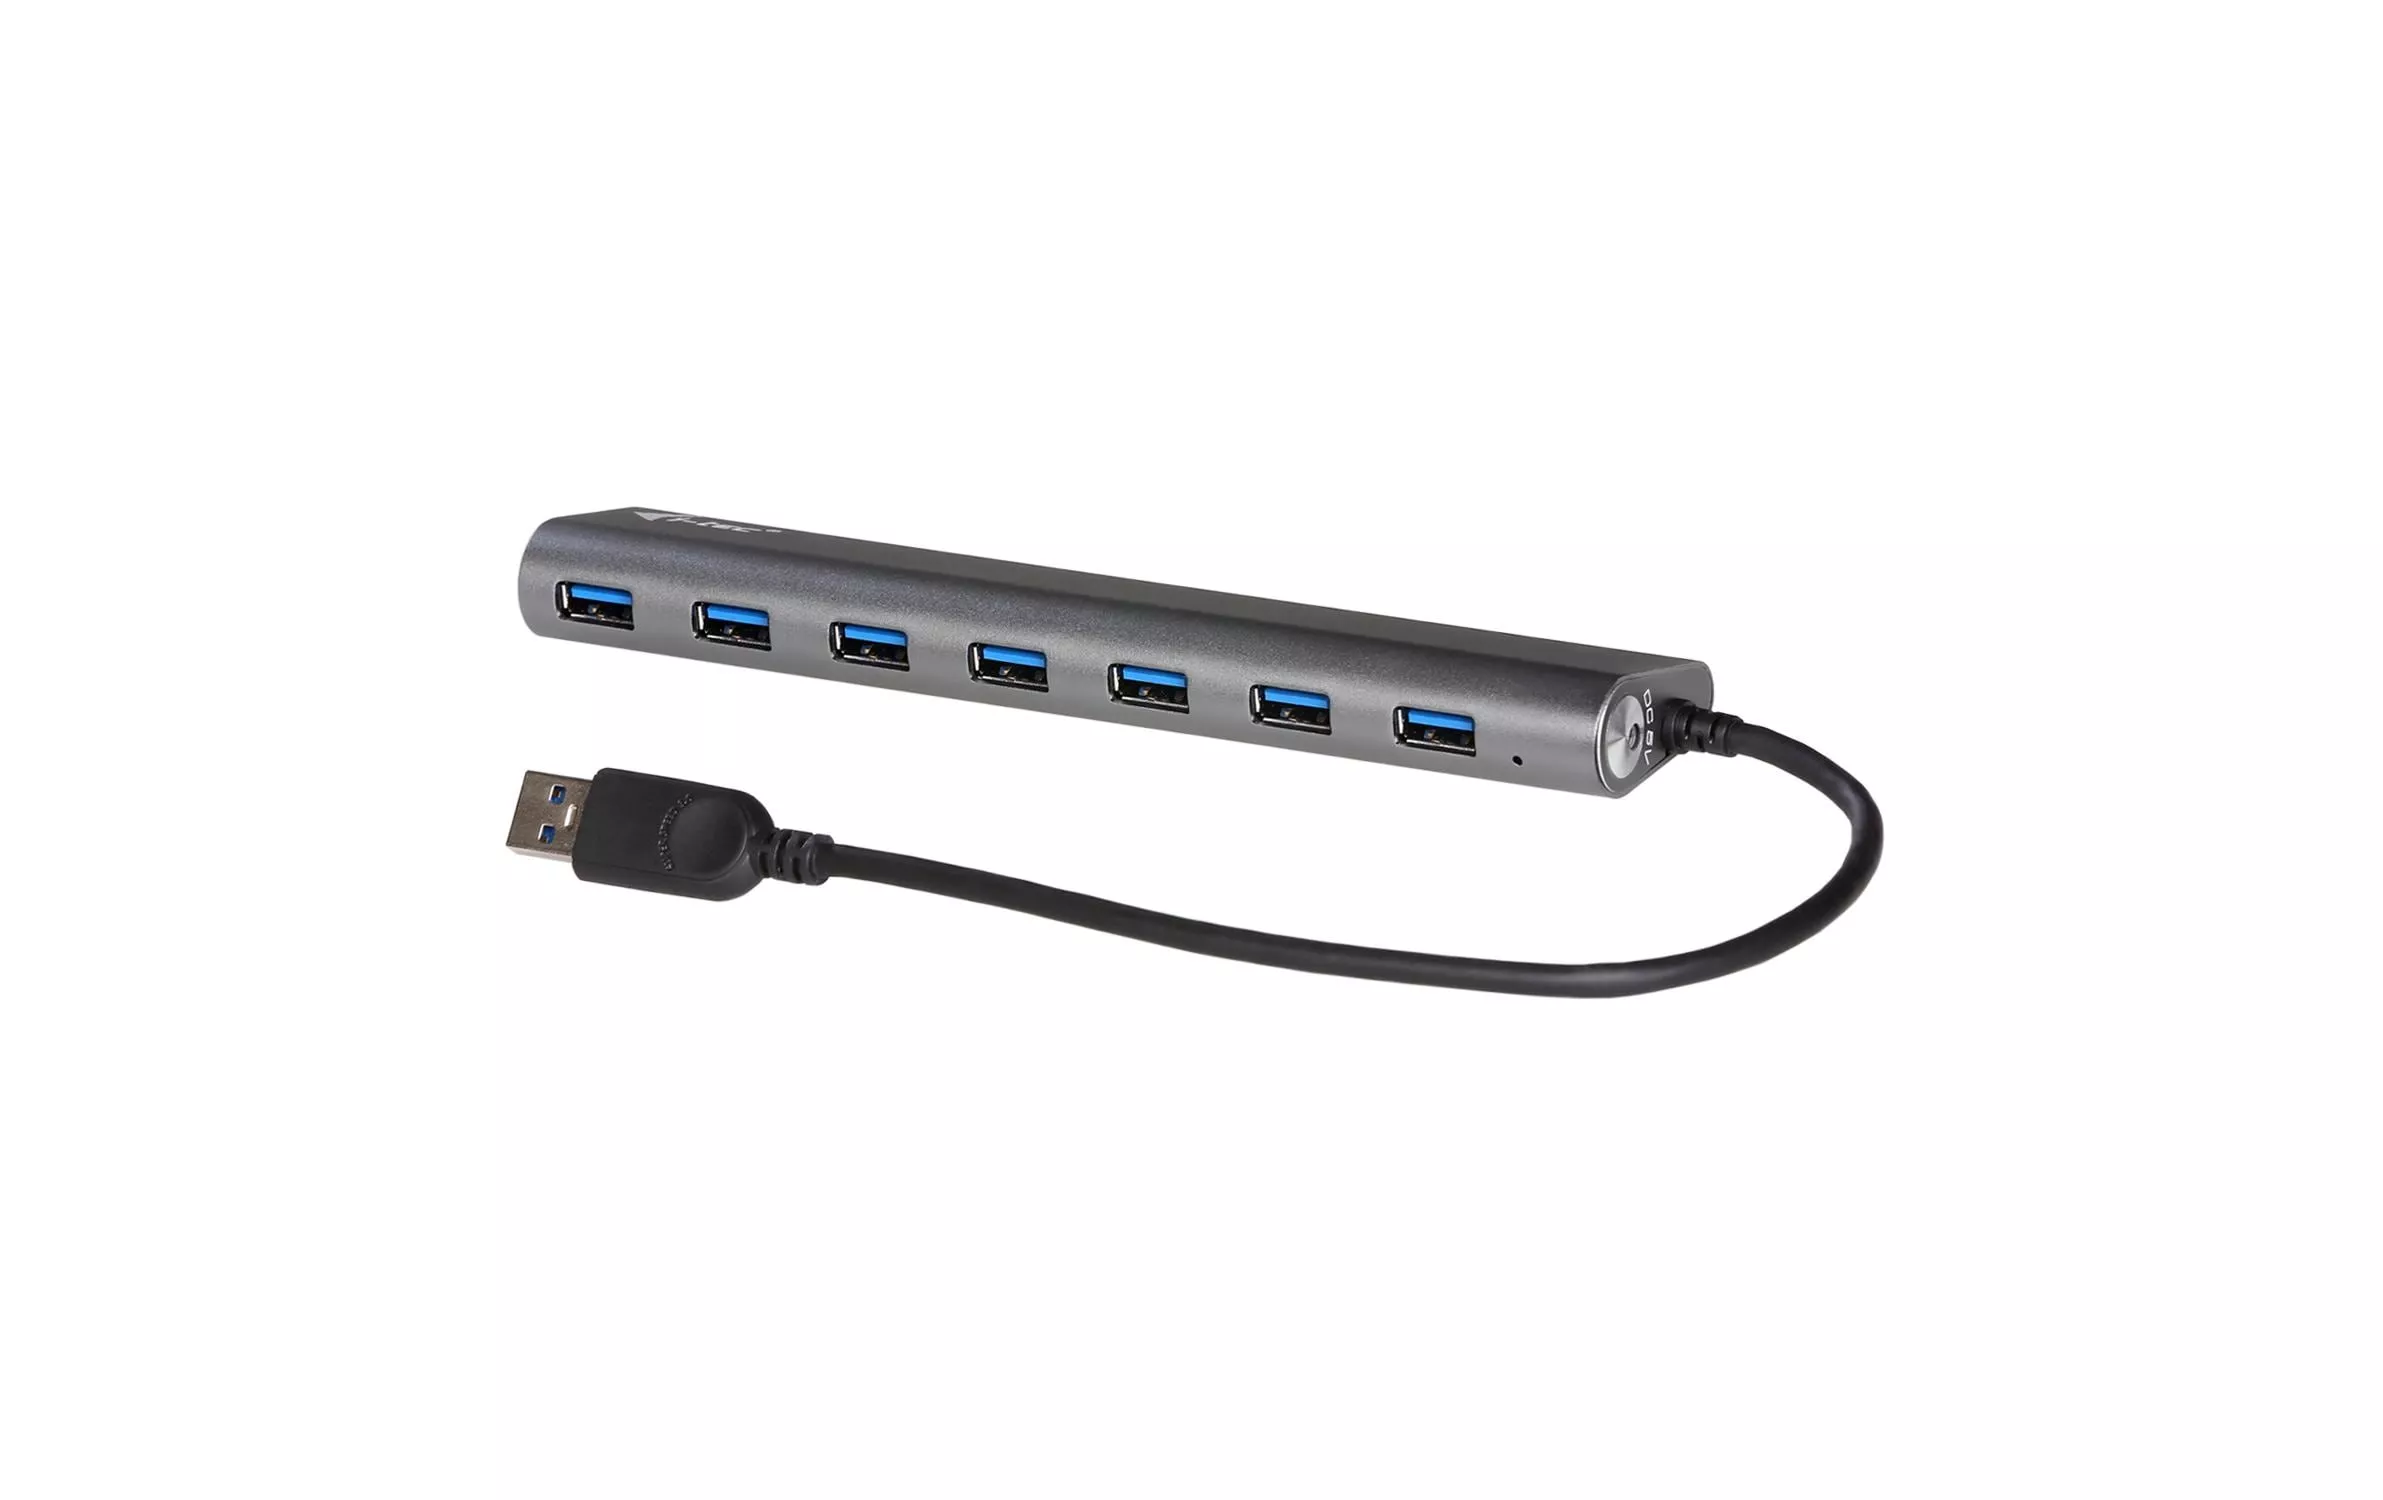 USB Hub USB 3.0 Metal Charging HUB 7 Port